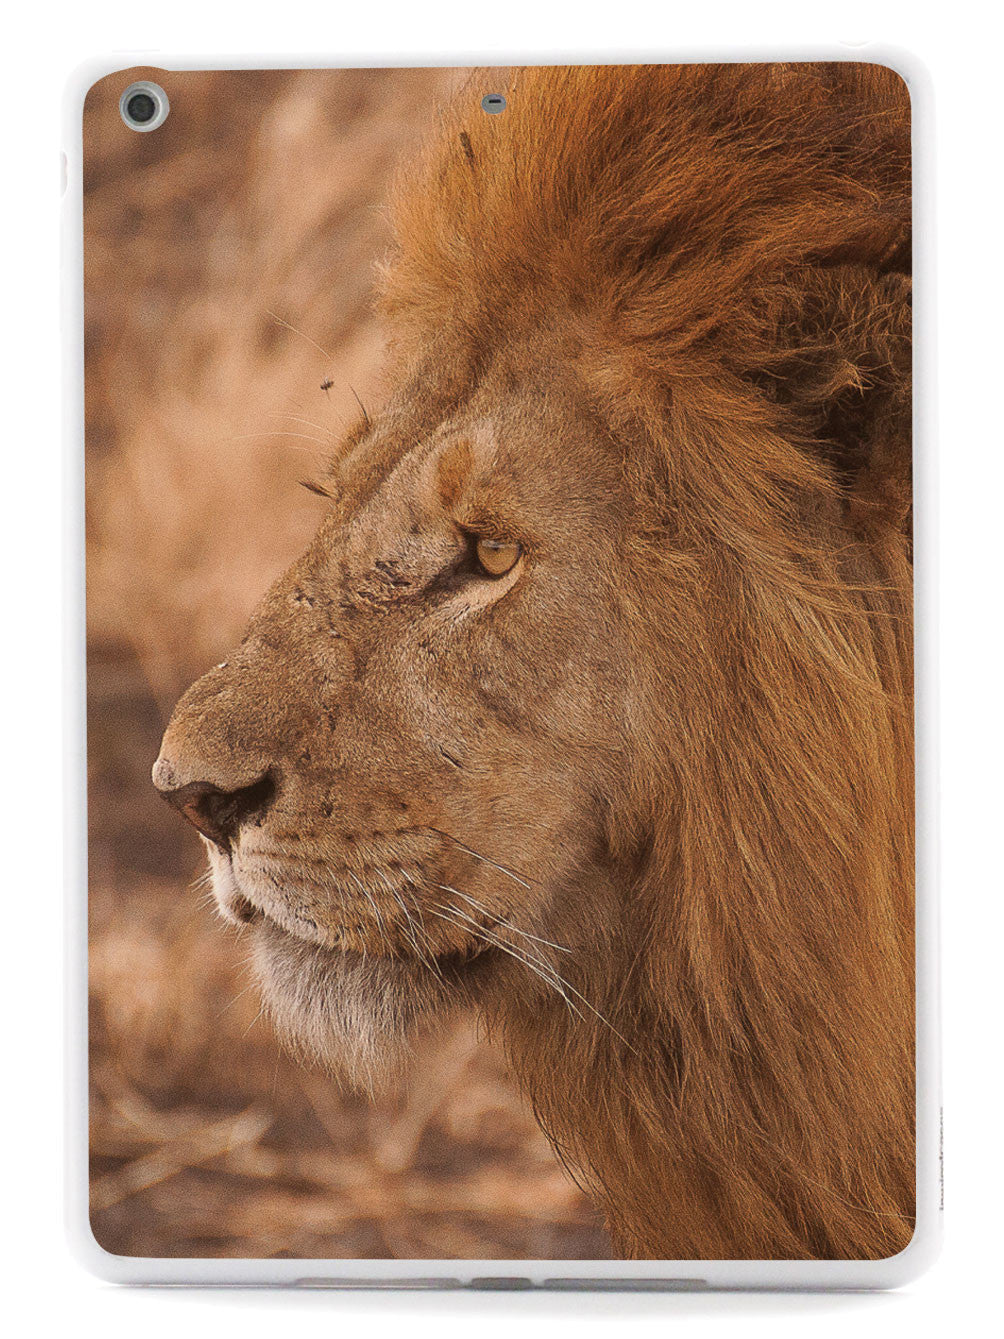 Majestic Lion Profile Case